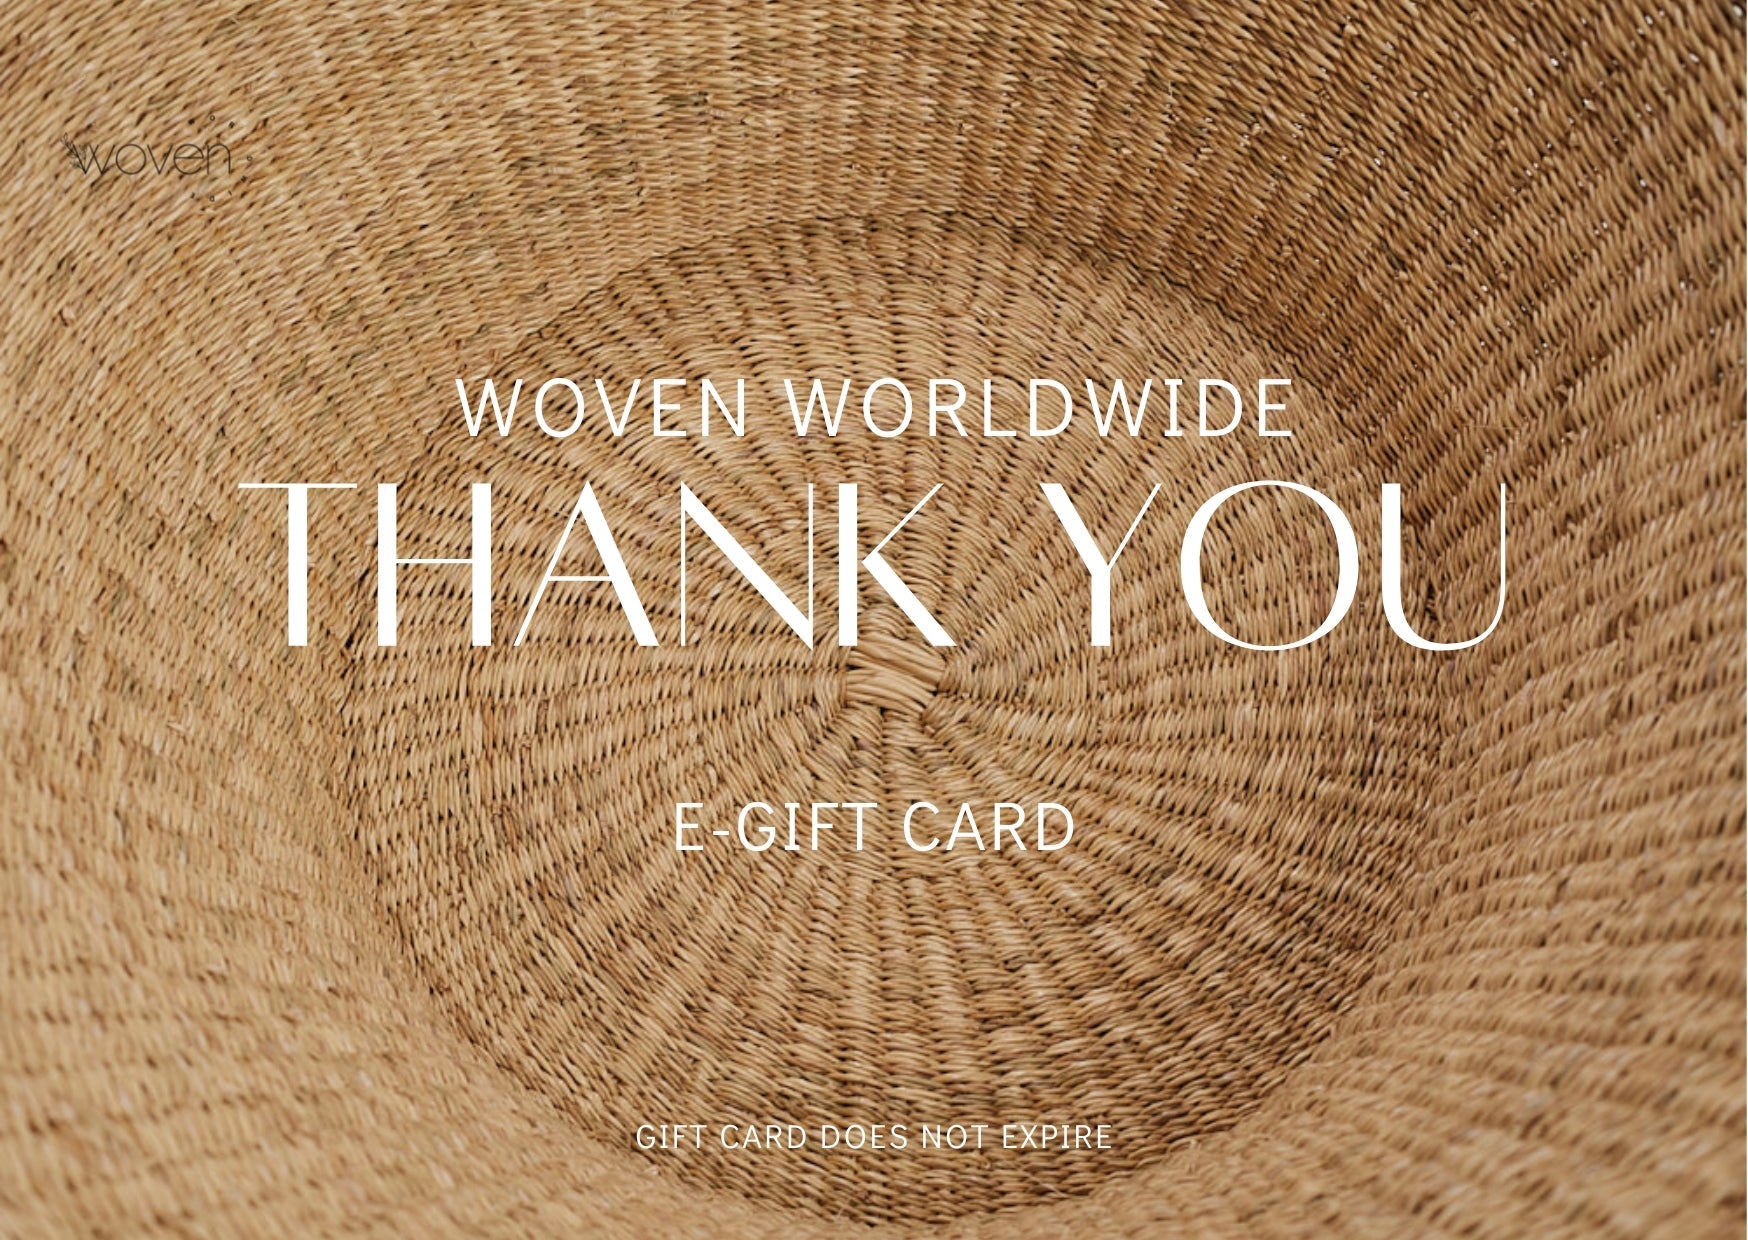 Woven Worldwide E-Gift Card - Woven Worldwide